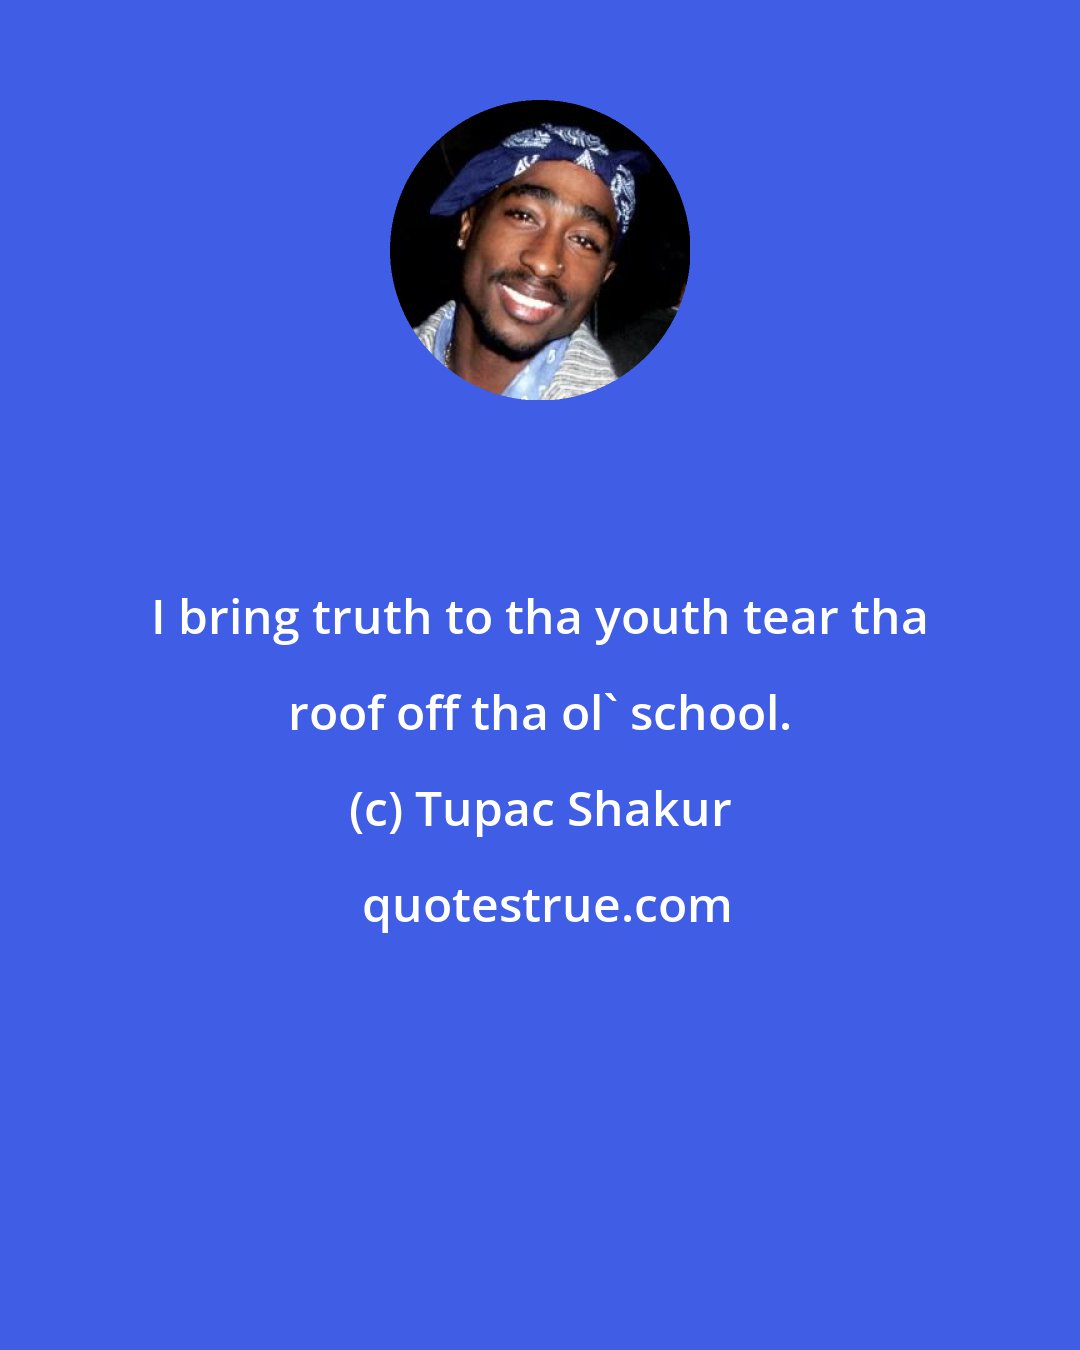 Tupac Shakur: I bring truth to tha youth tear tha roof off tha ol' school.